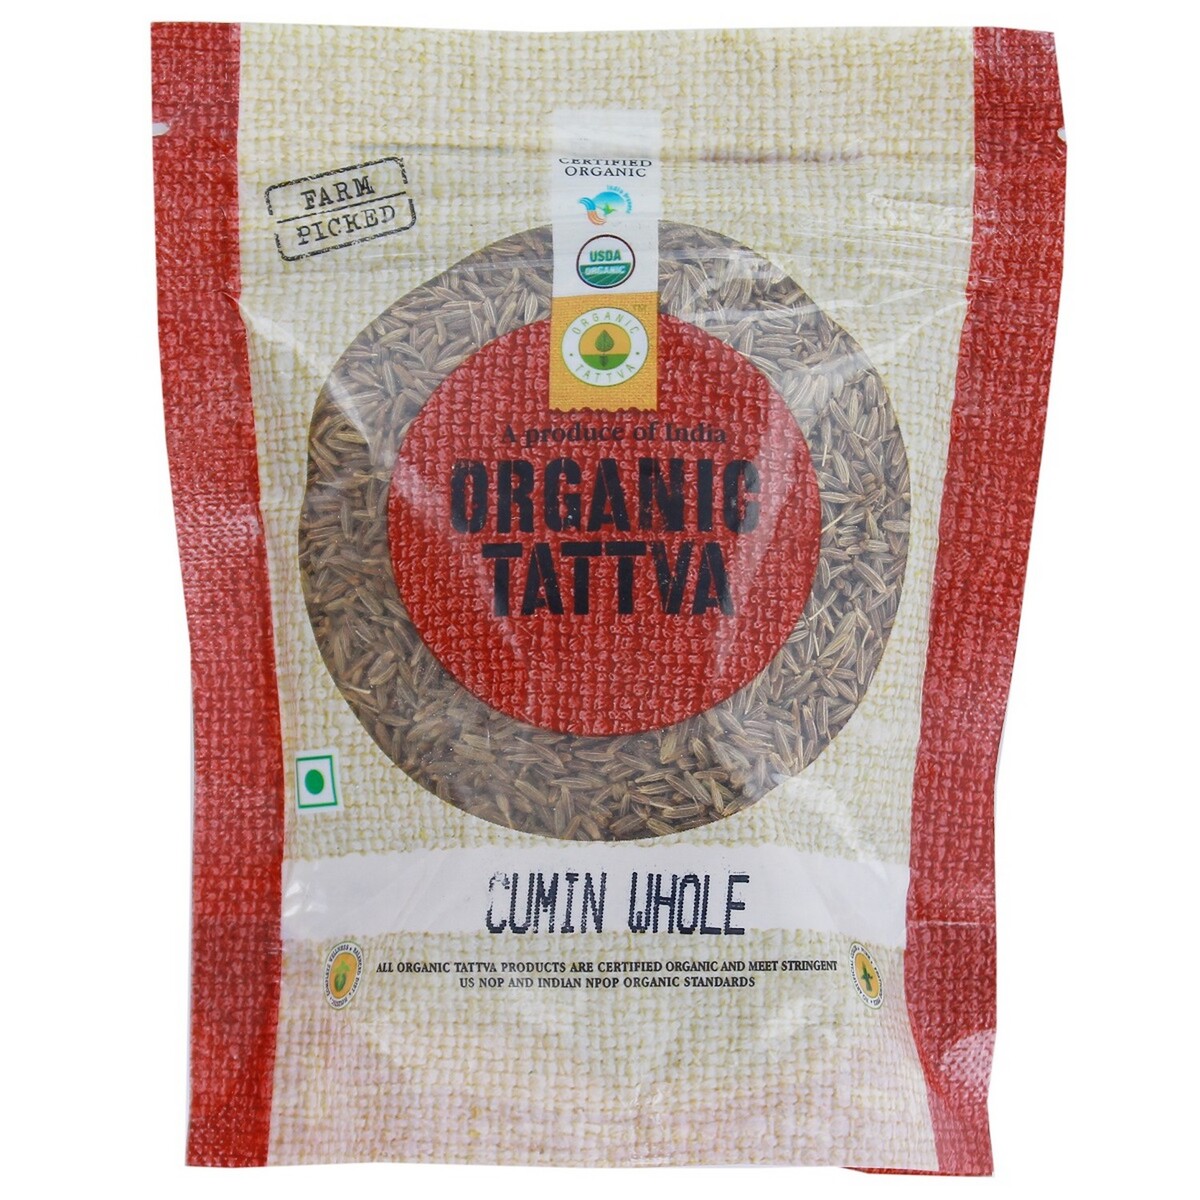 Organic Tattva Organic Cumin Whole 100g